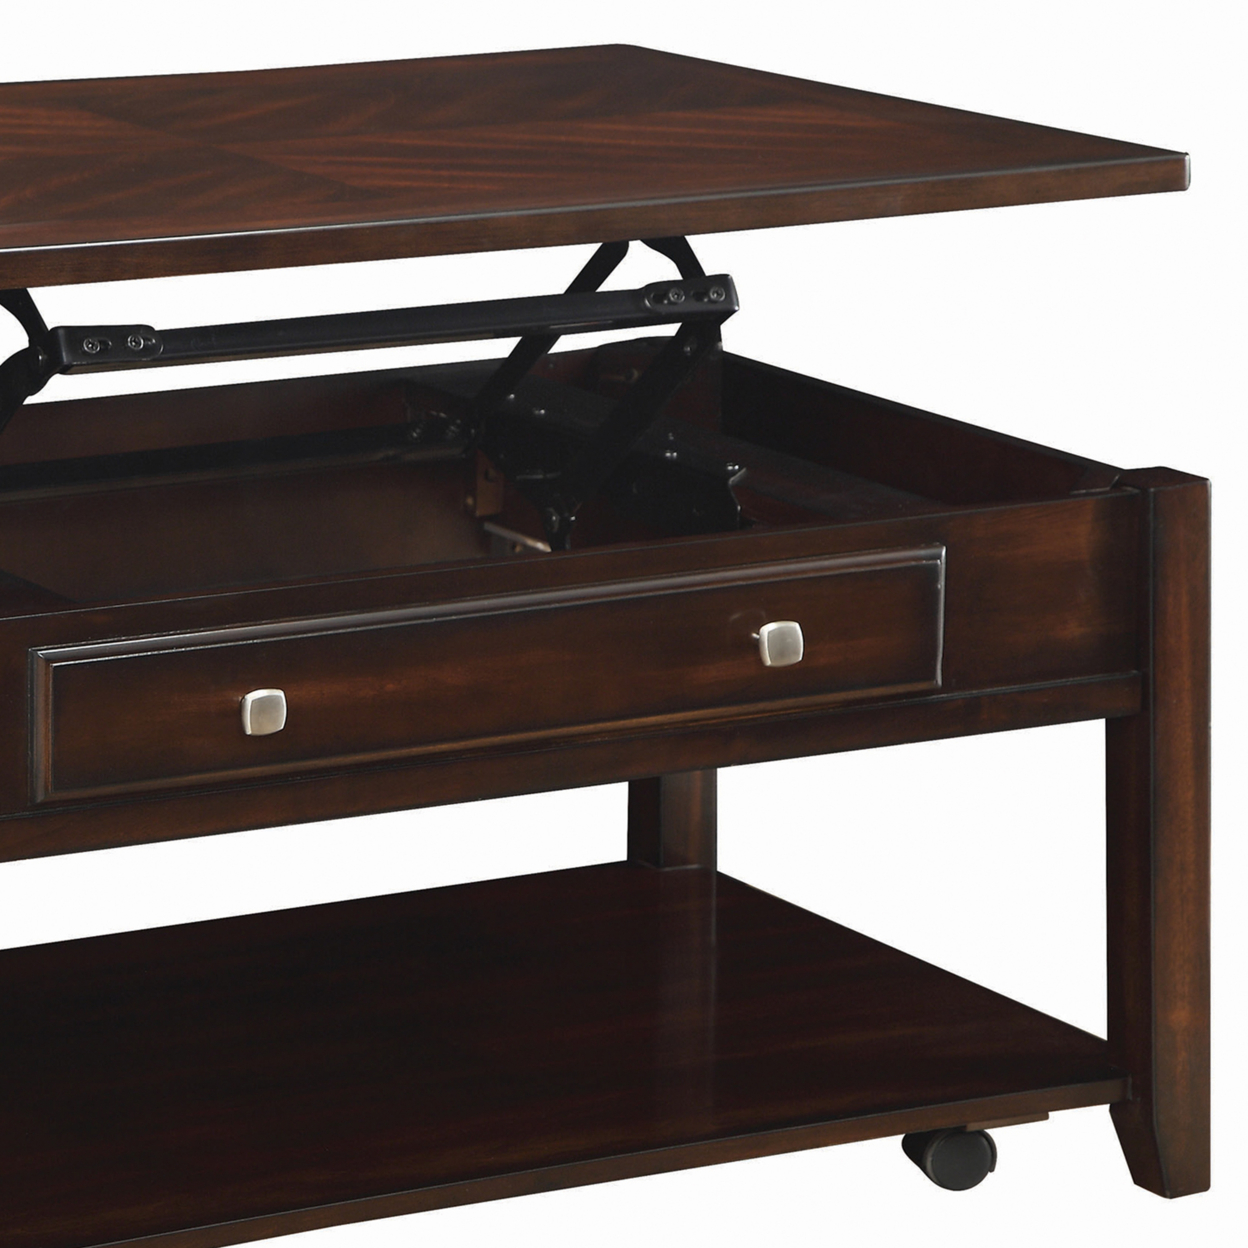 Modern Lift Top Wooden Coffee Table With Storage & Shelf, Walnut Brown- Saltoro Sherpi